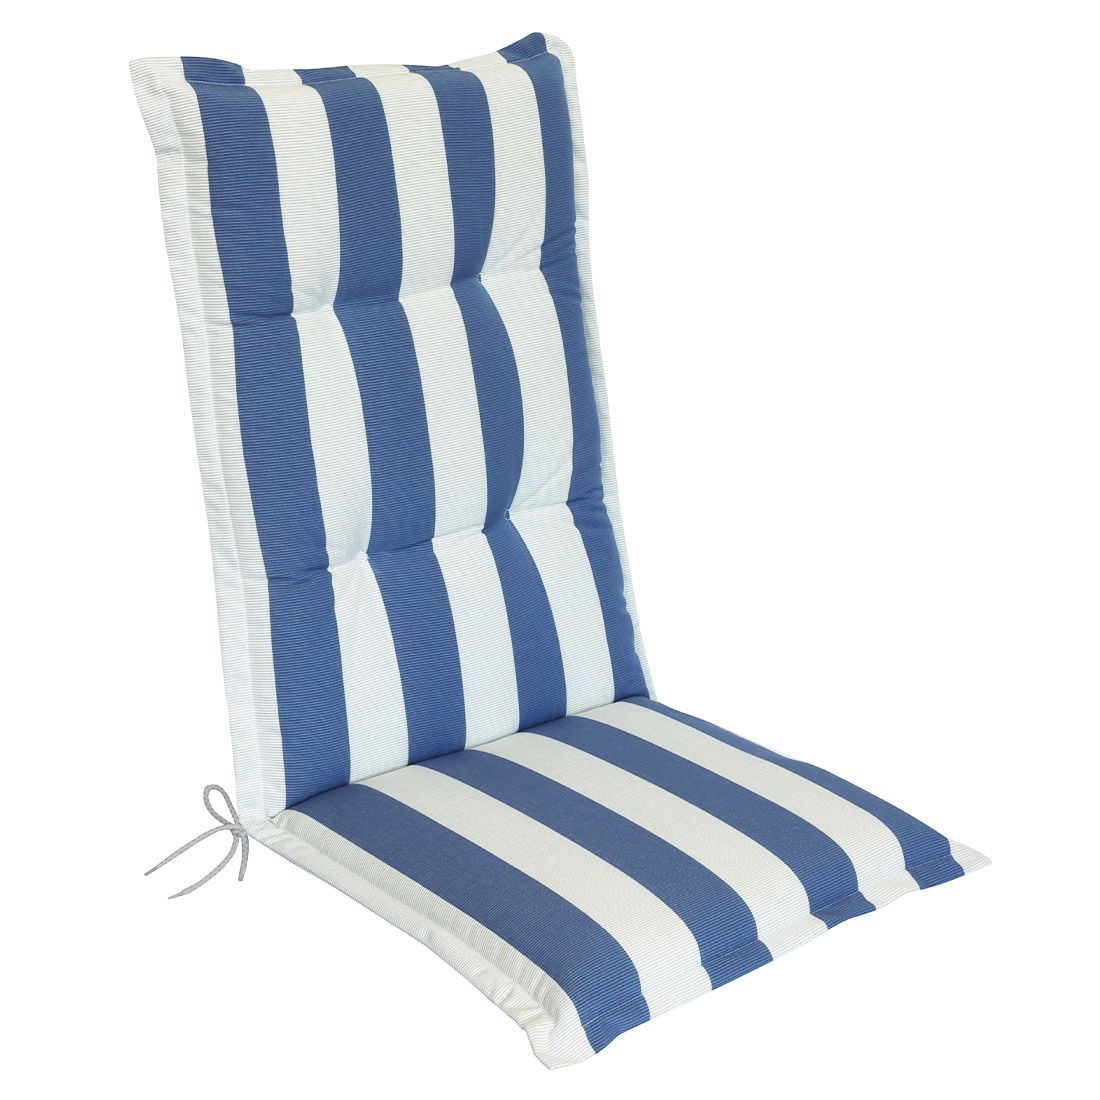 OUTLIV. Florence Sesselauflage hoch 120x50x8cm Acryl Blau-Weiß Gestreift | Sessel-Erhöhungen